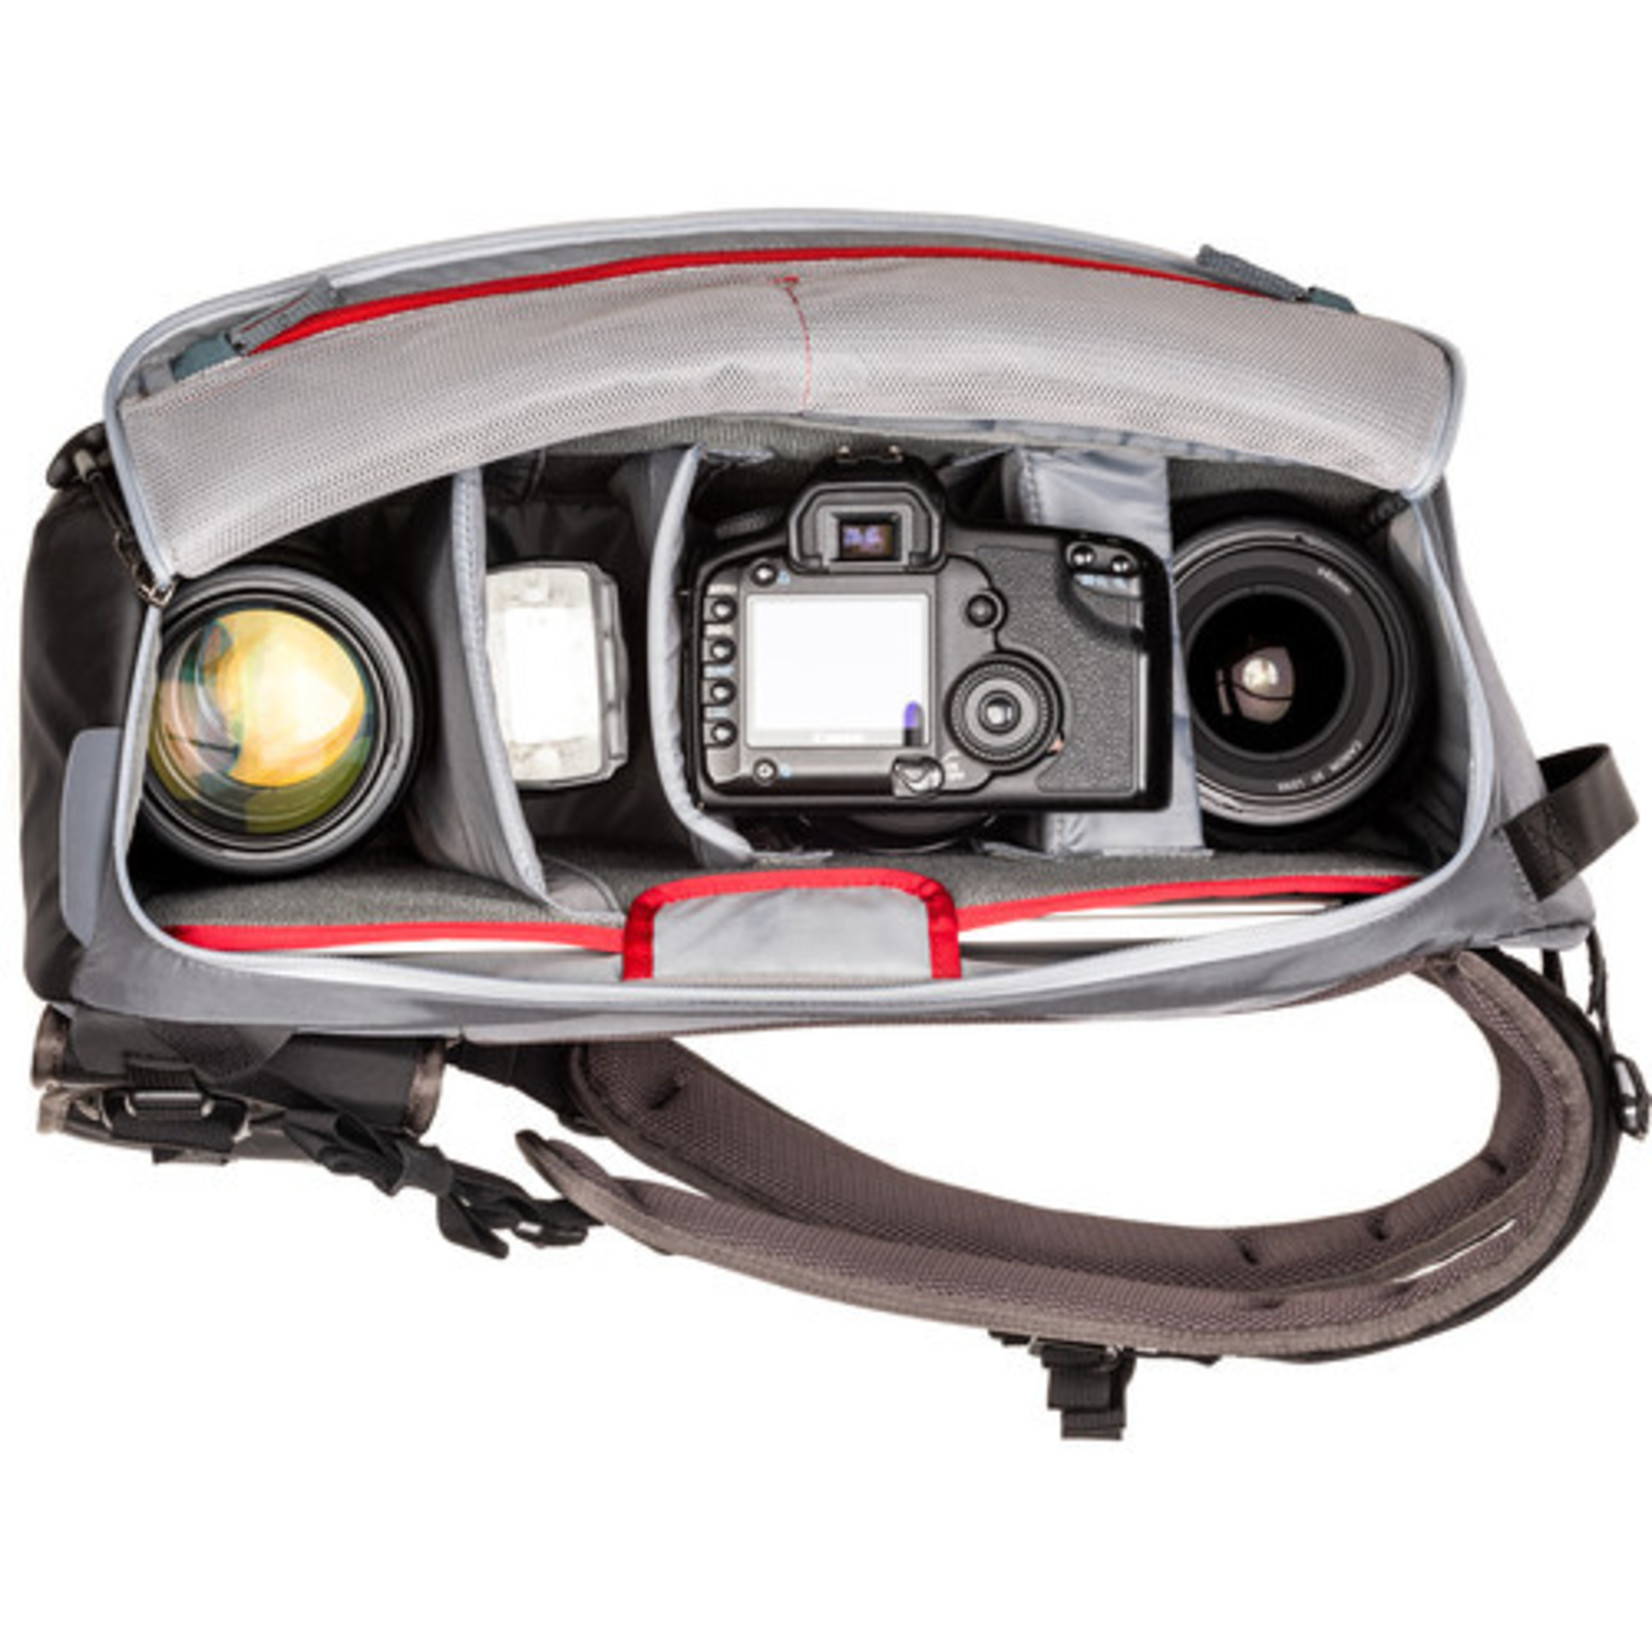 MindShift Photocross 15 Backpack - Carbon Grey